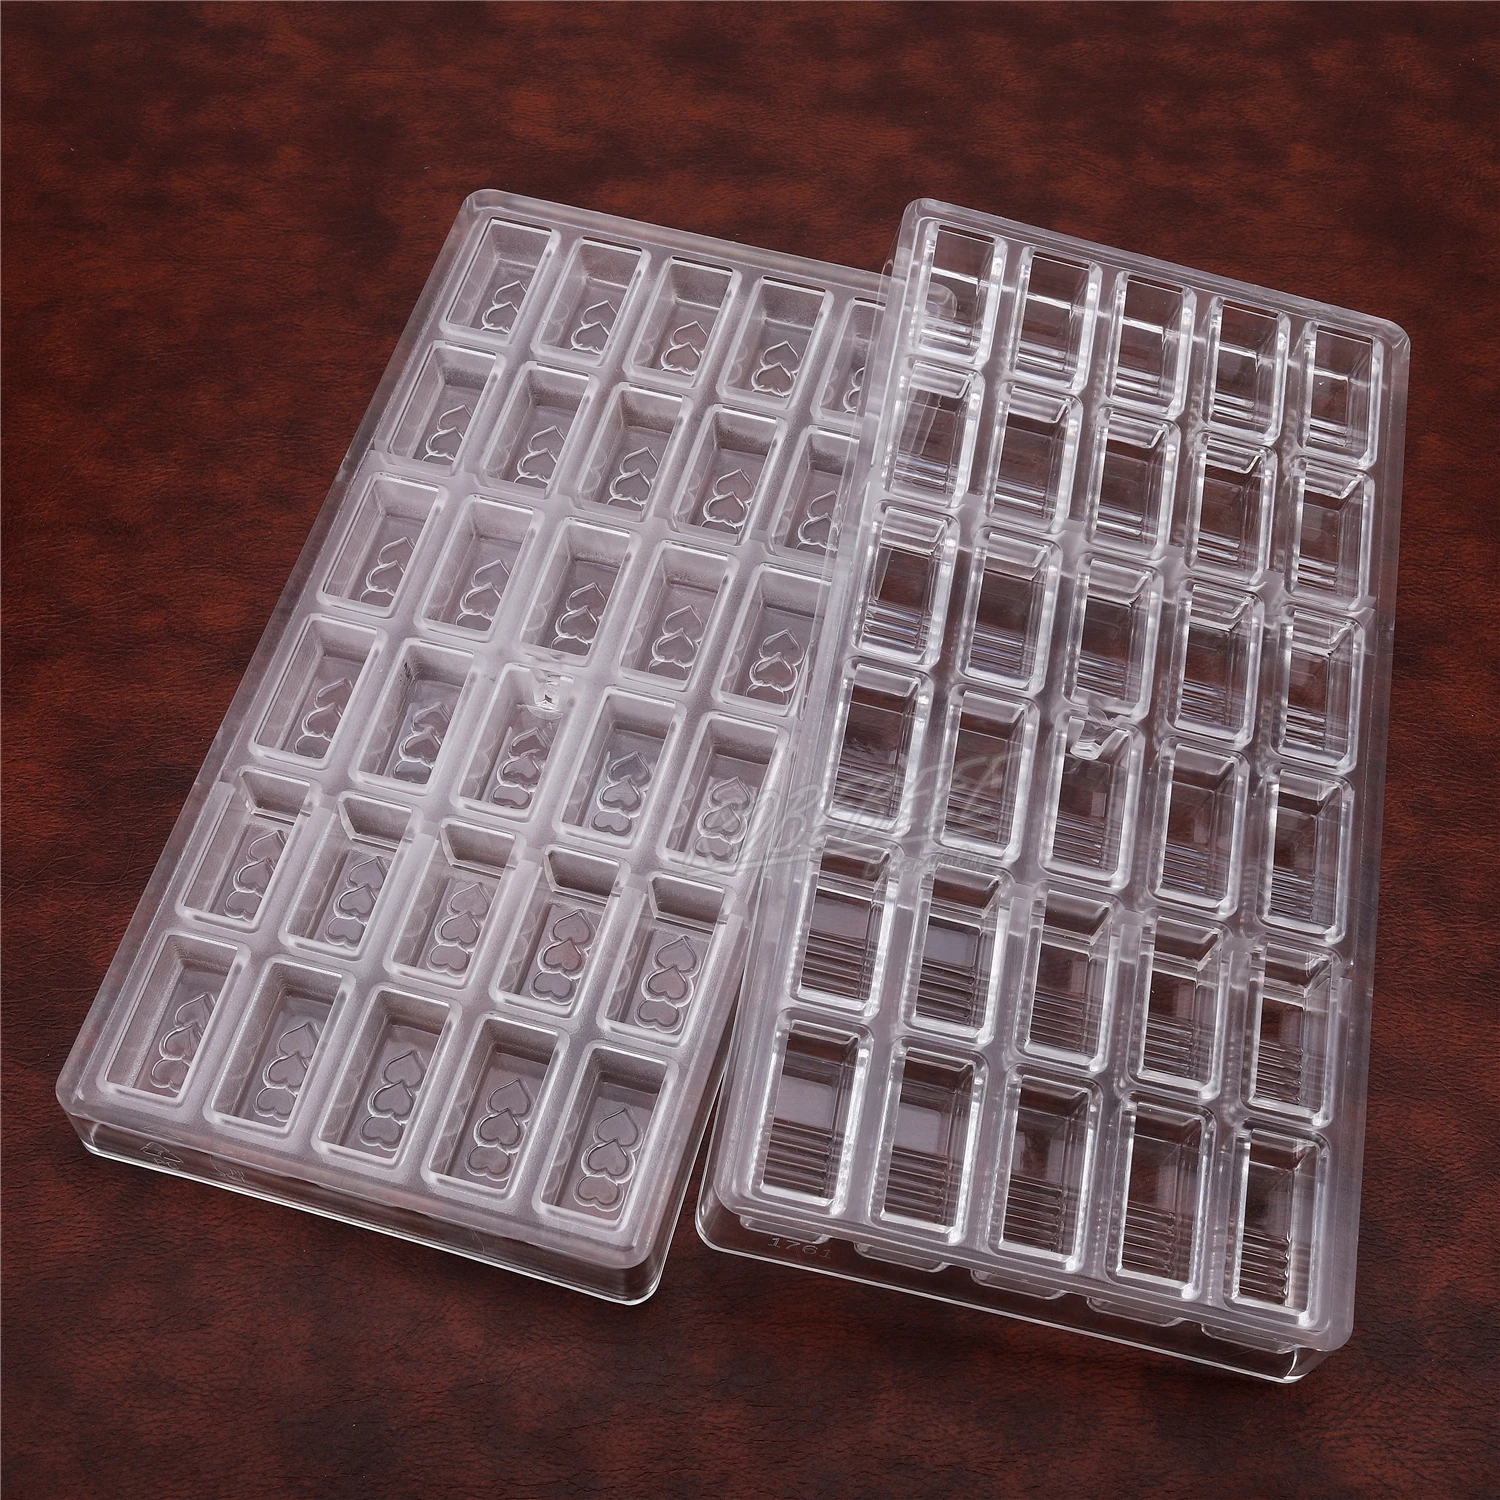 30 Caivites מלבן קוביה עם הלב תבנית פלסטיק צורה עובש שוקולד סוכריות מכונת קרח תבניות עבור DIY אפייה גאדג ' טים, כלי